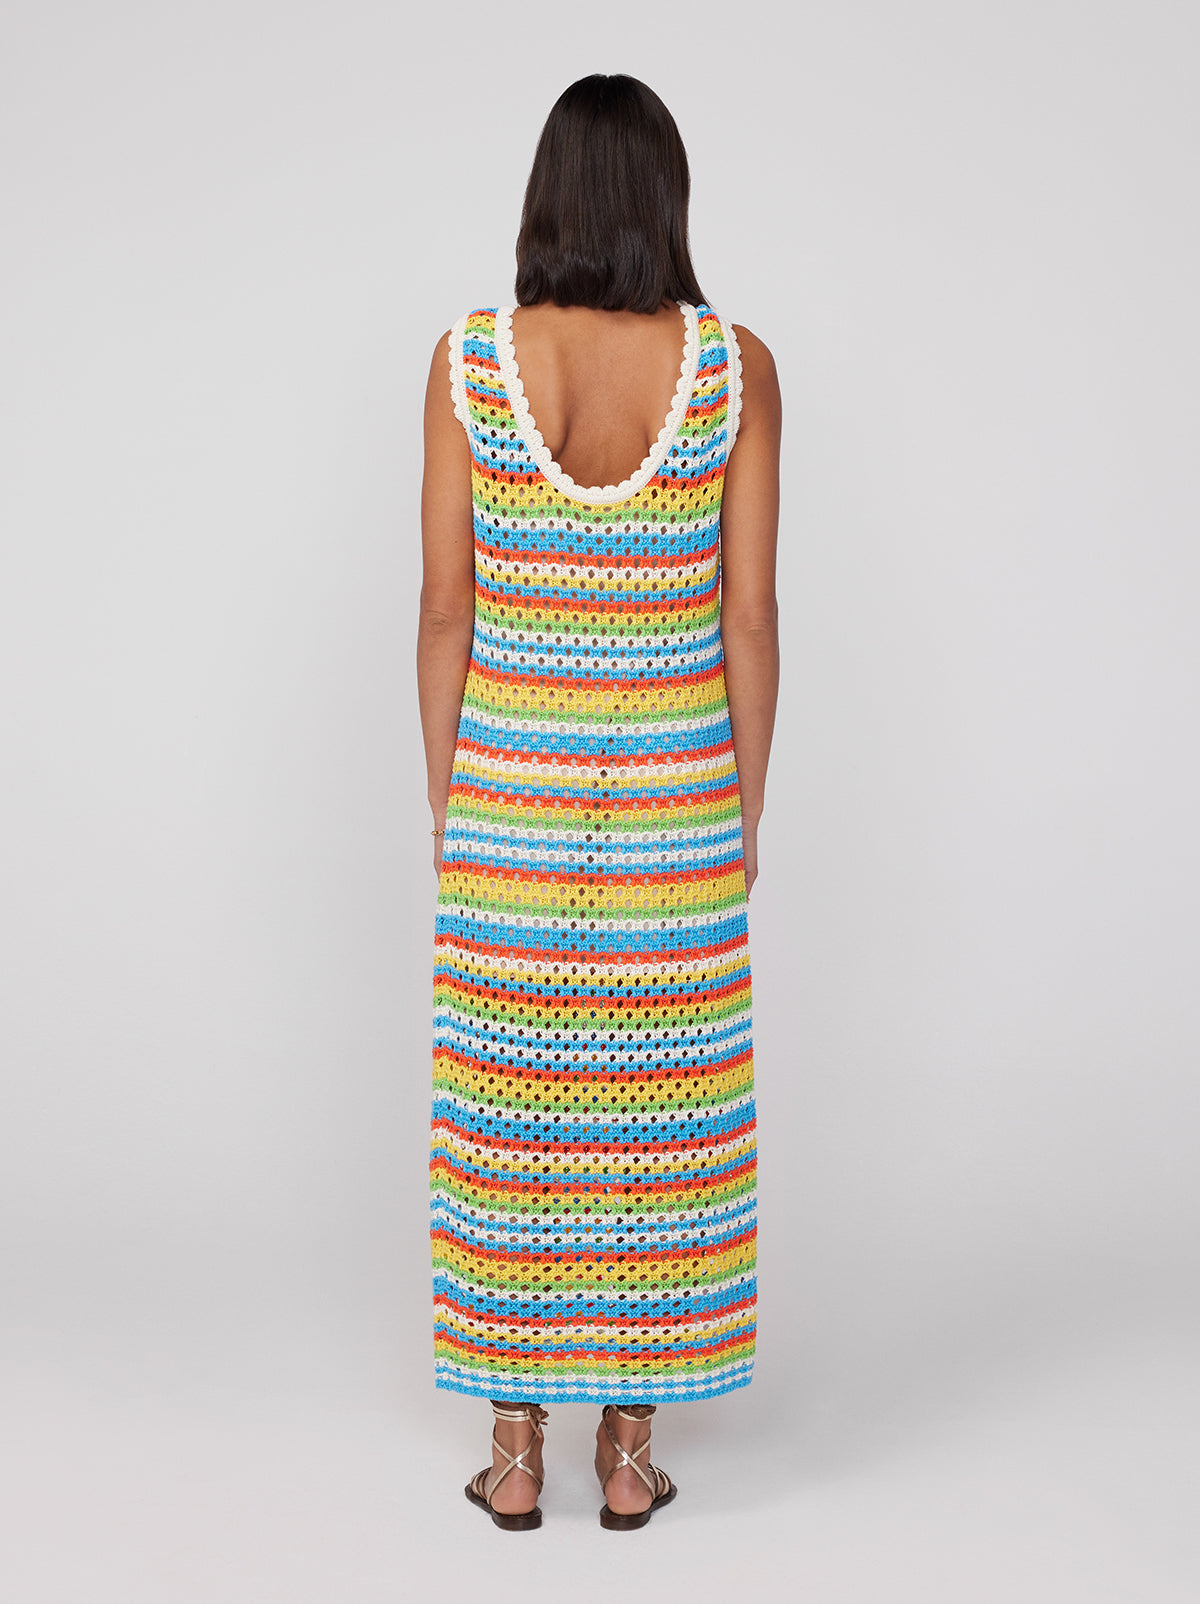 Bunty Blue Stripe Crochet Knit Dress By KITRI Studio